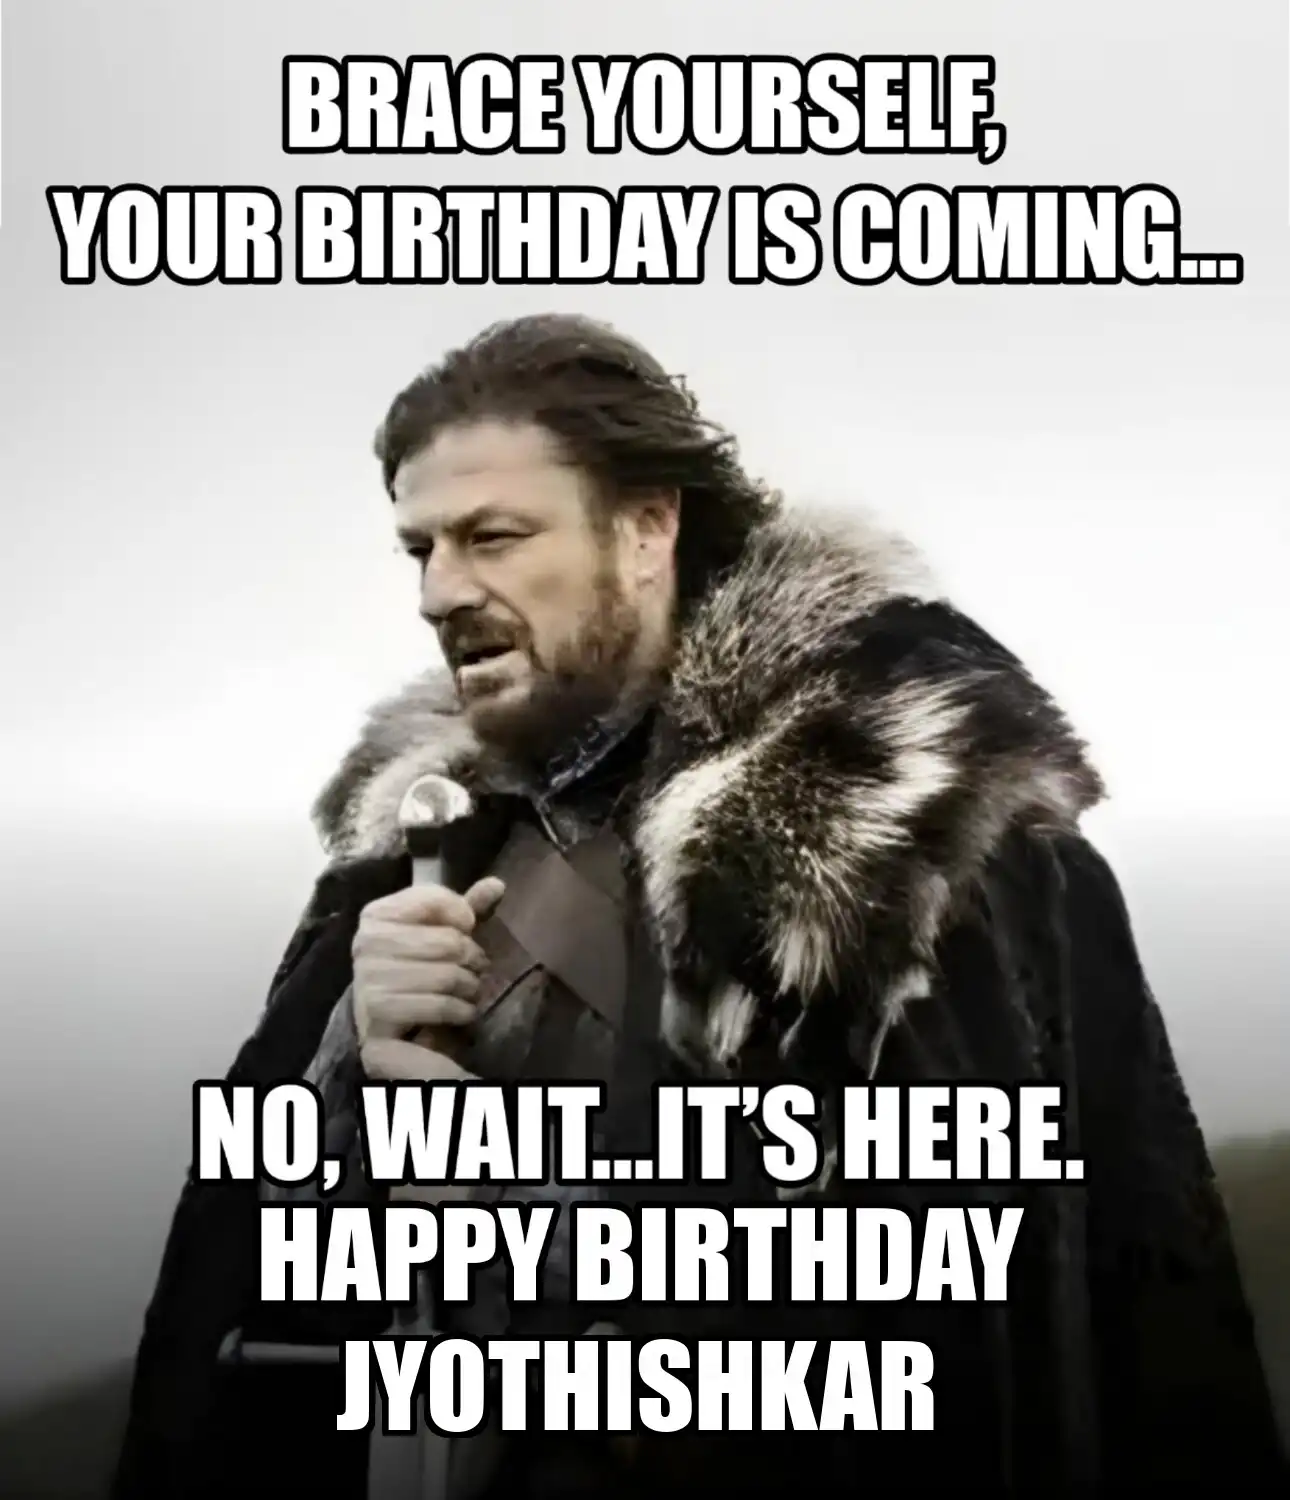 Happy Birthday Jyothishkar Brace Yourself Your Birthday Is Coming Meme